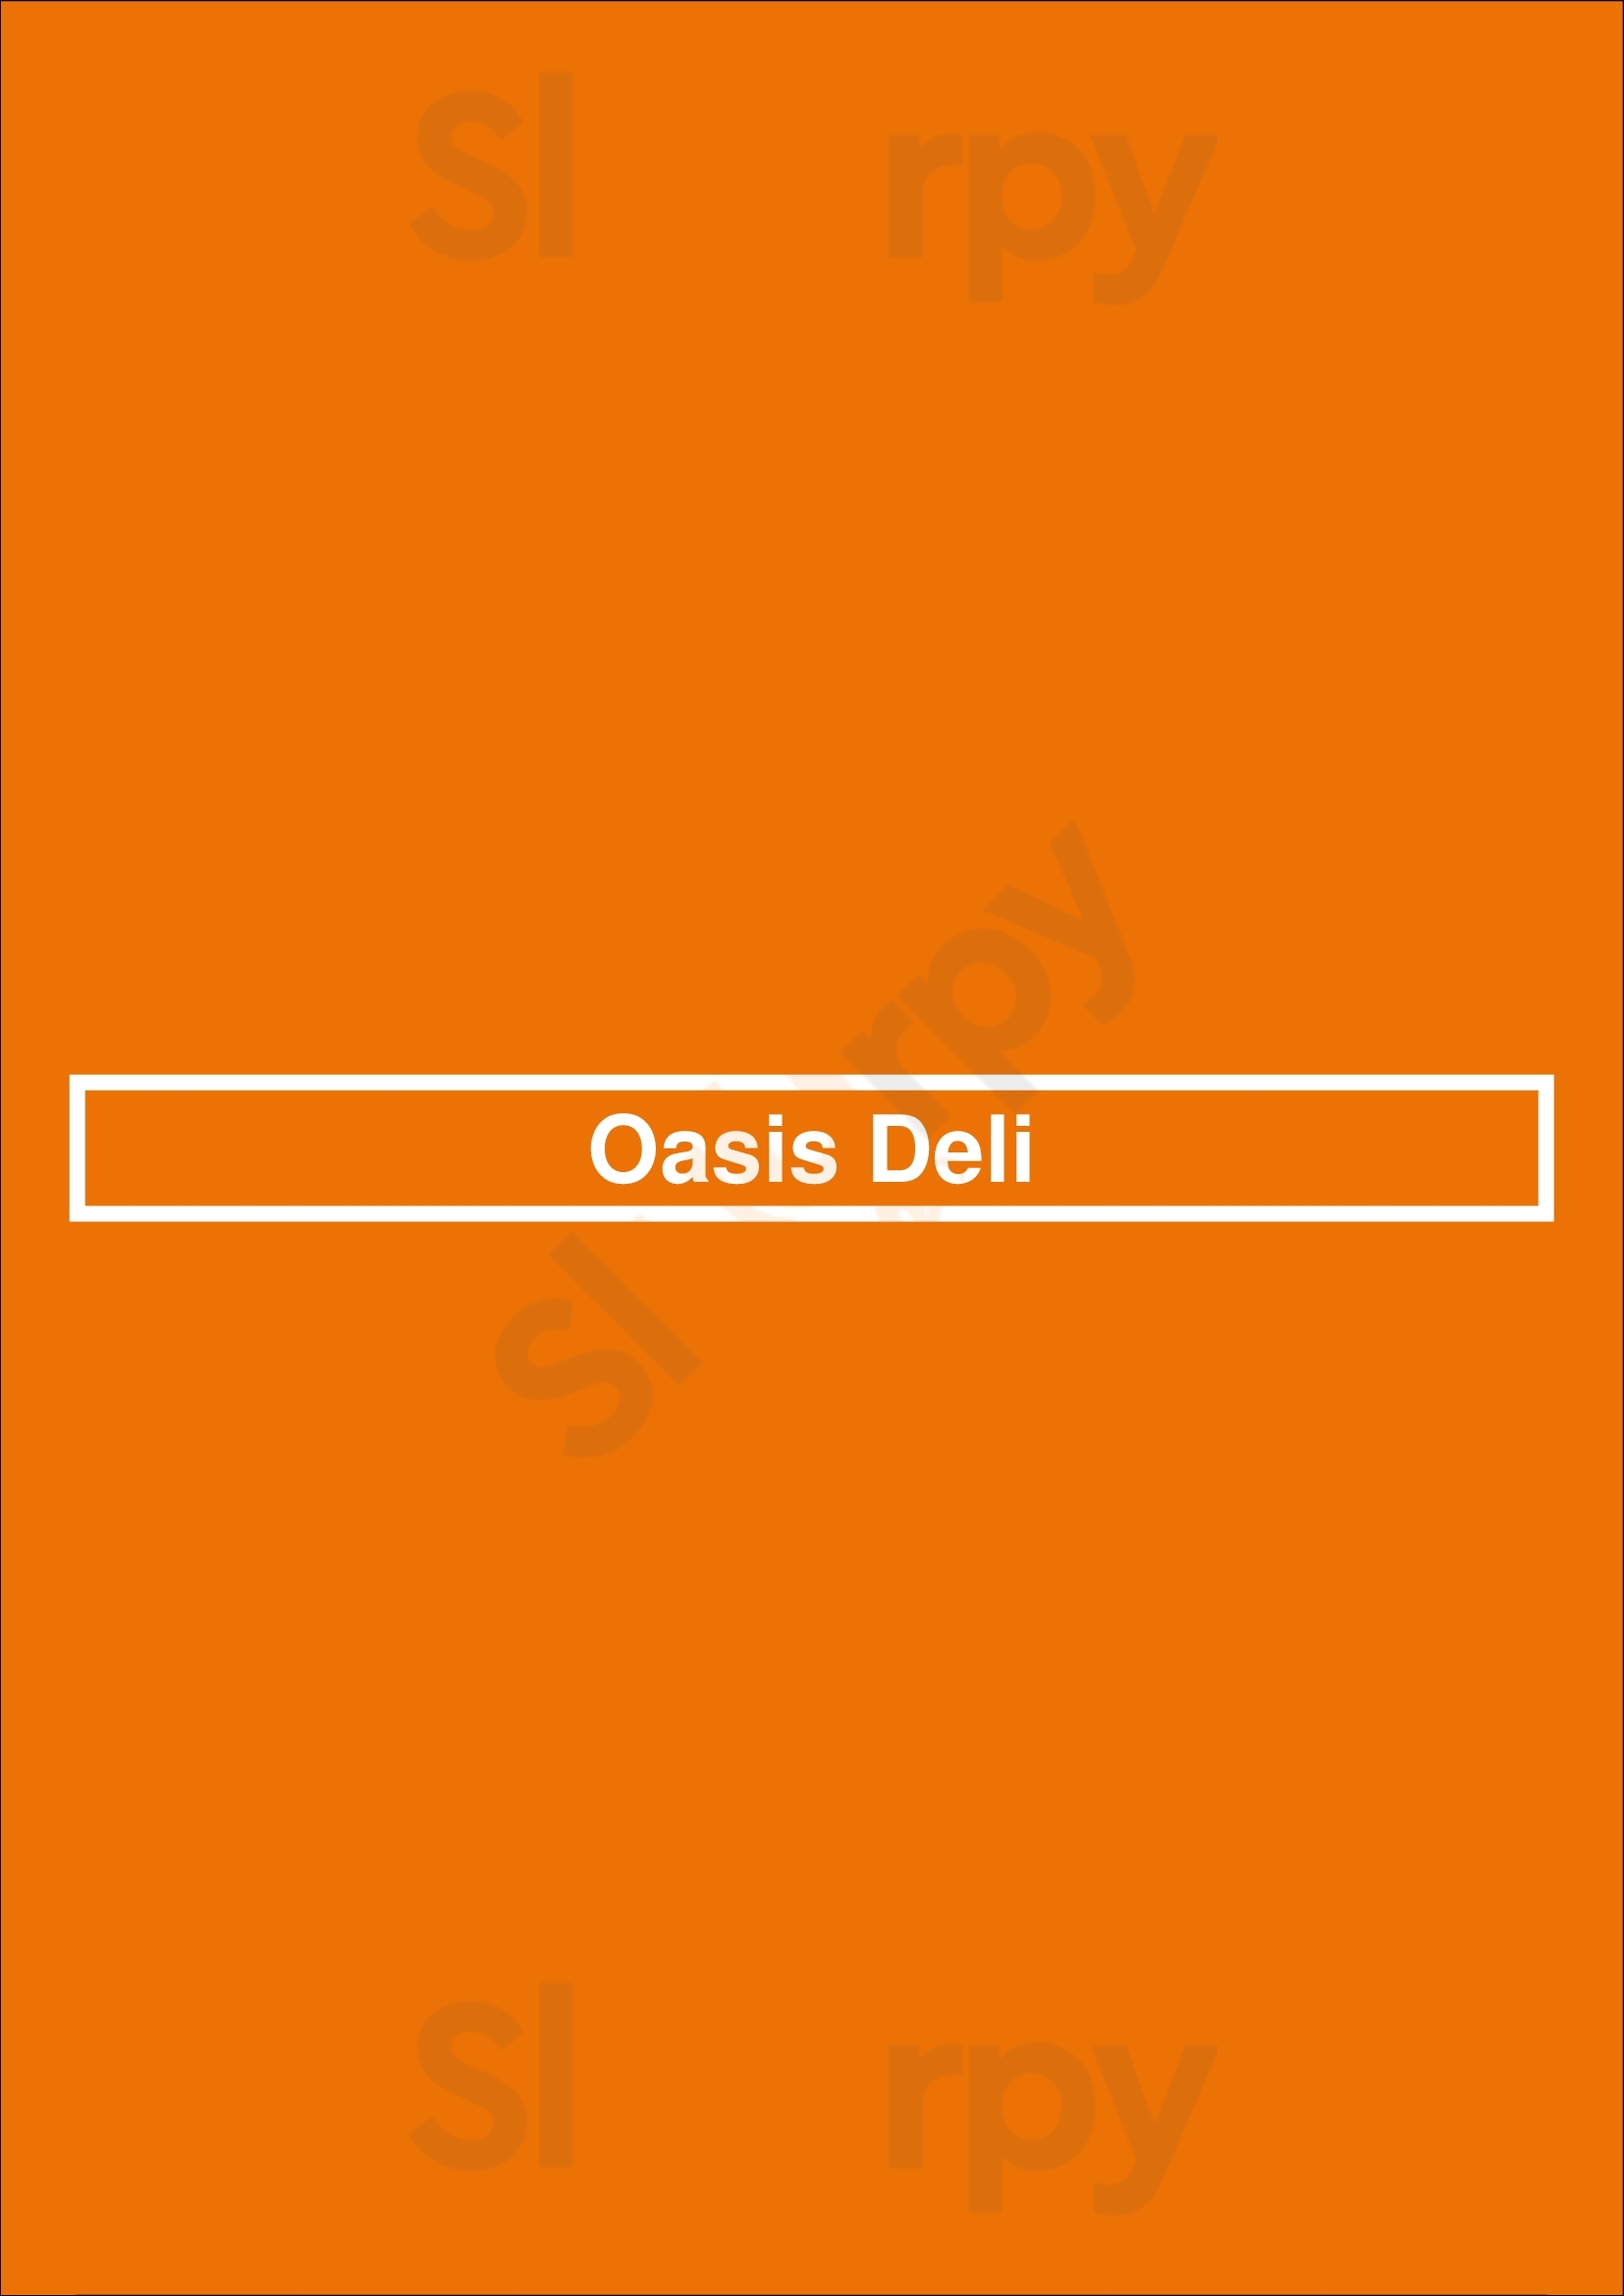 Oasis Deli San Jose Menu - 1